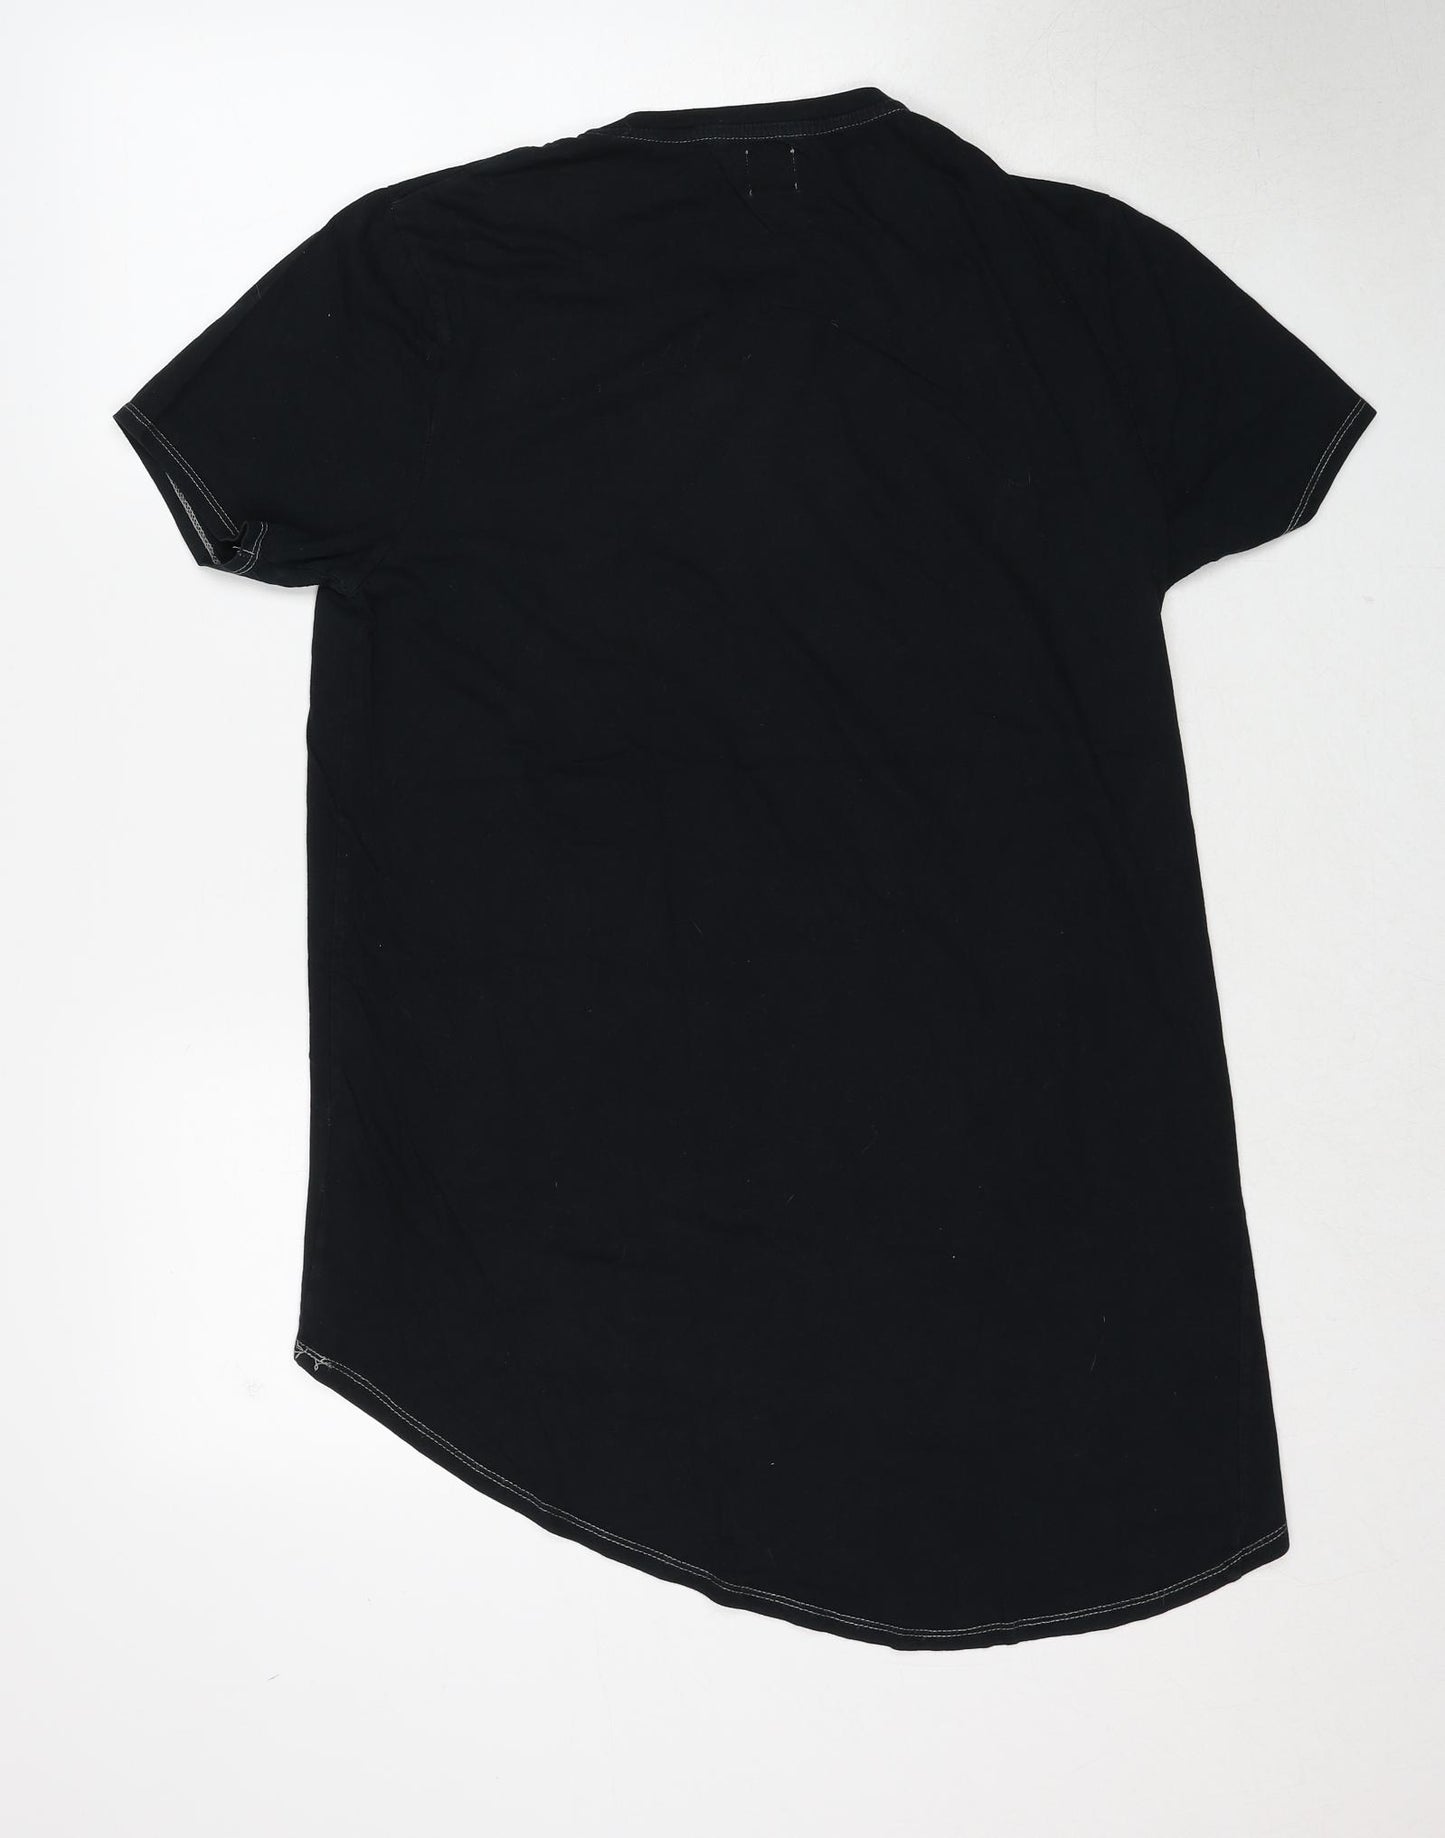 ASOS Womens Black Cotton Basic T-Shirt Size S Round Neck - Asymmetric